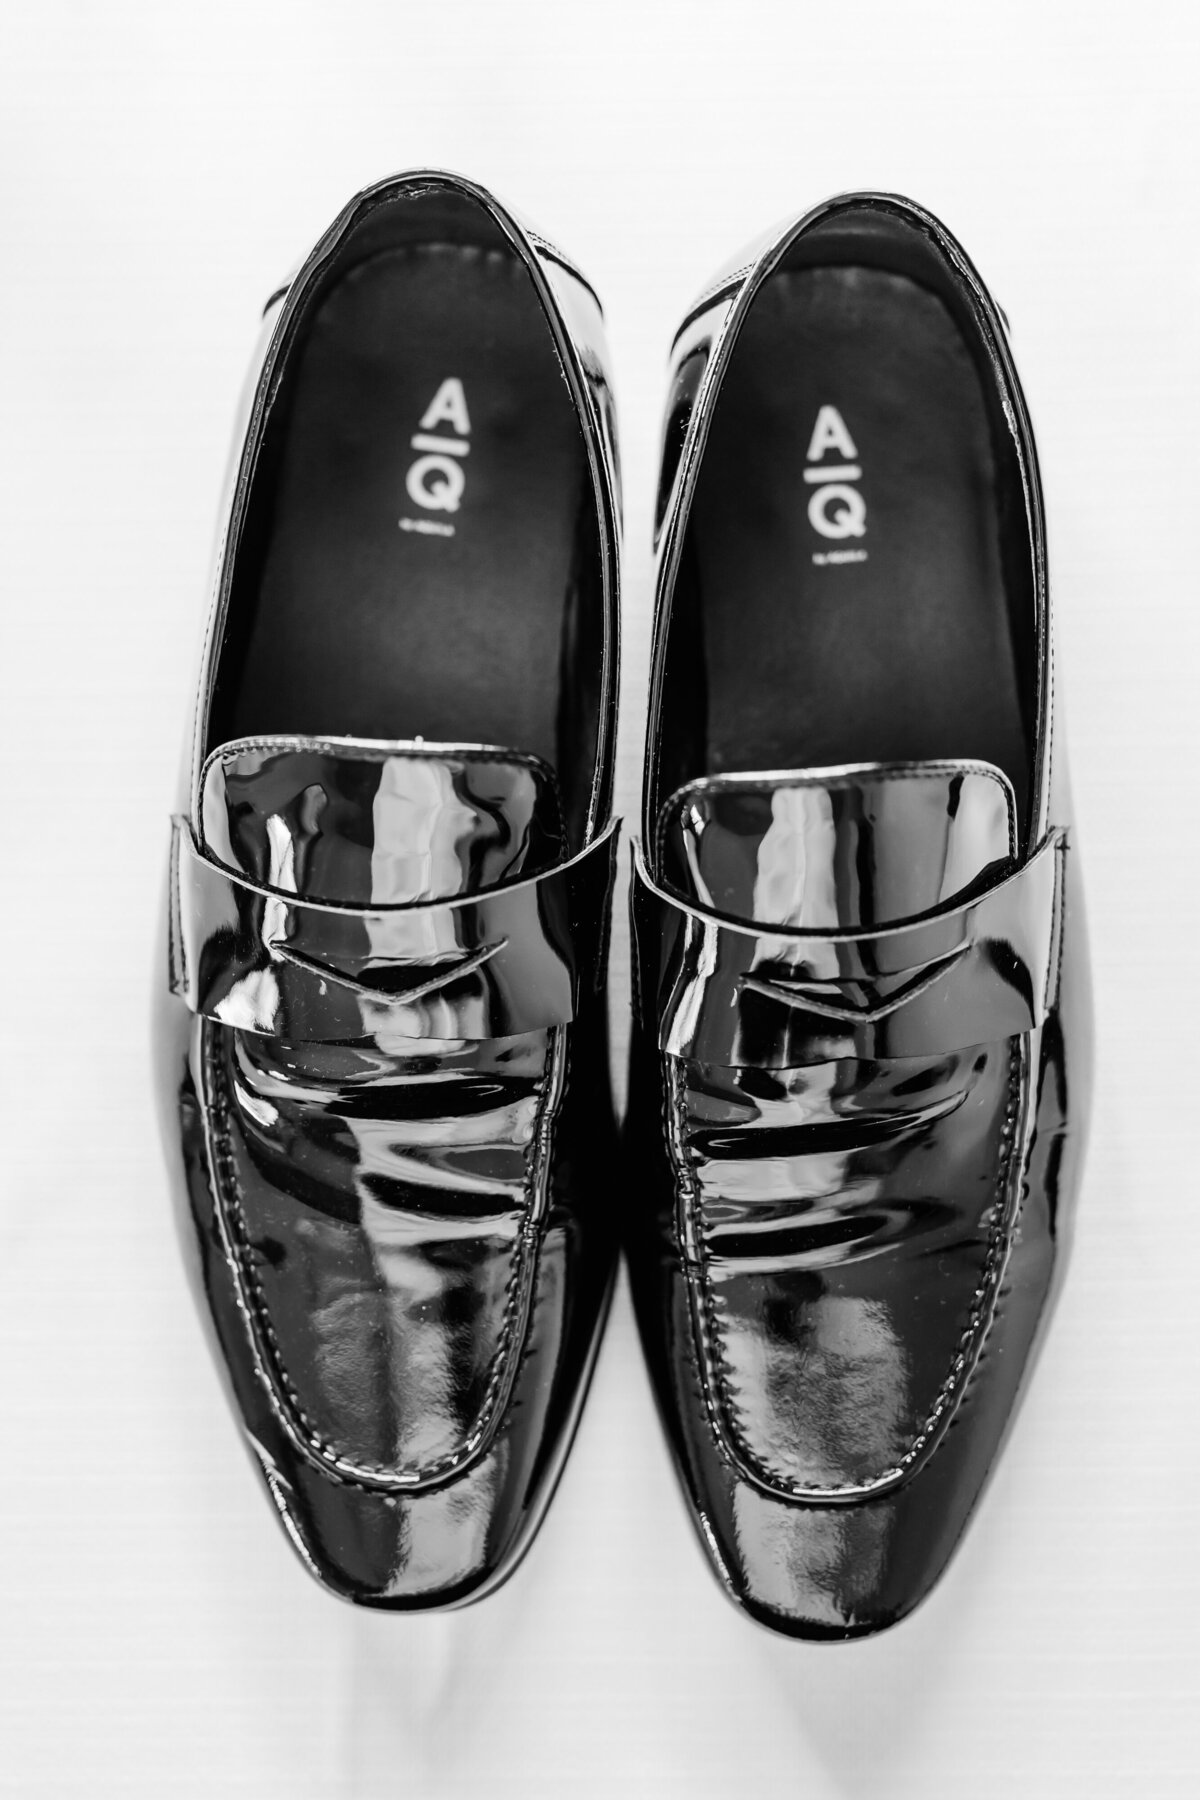 Black groom shoes